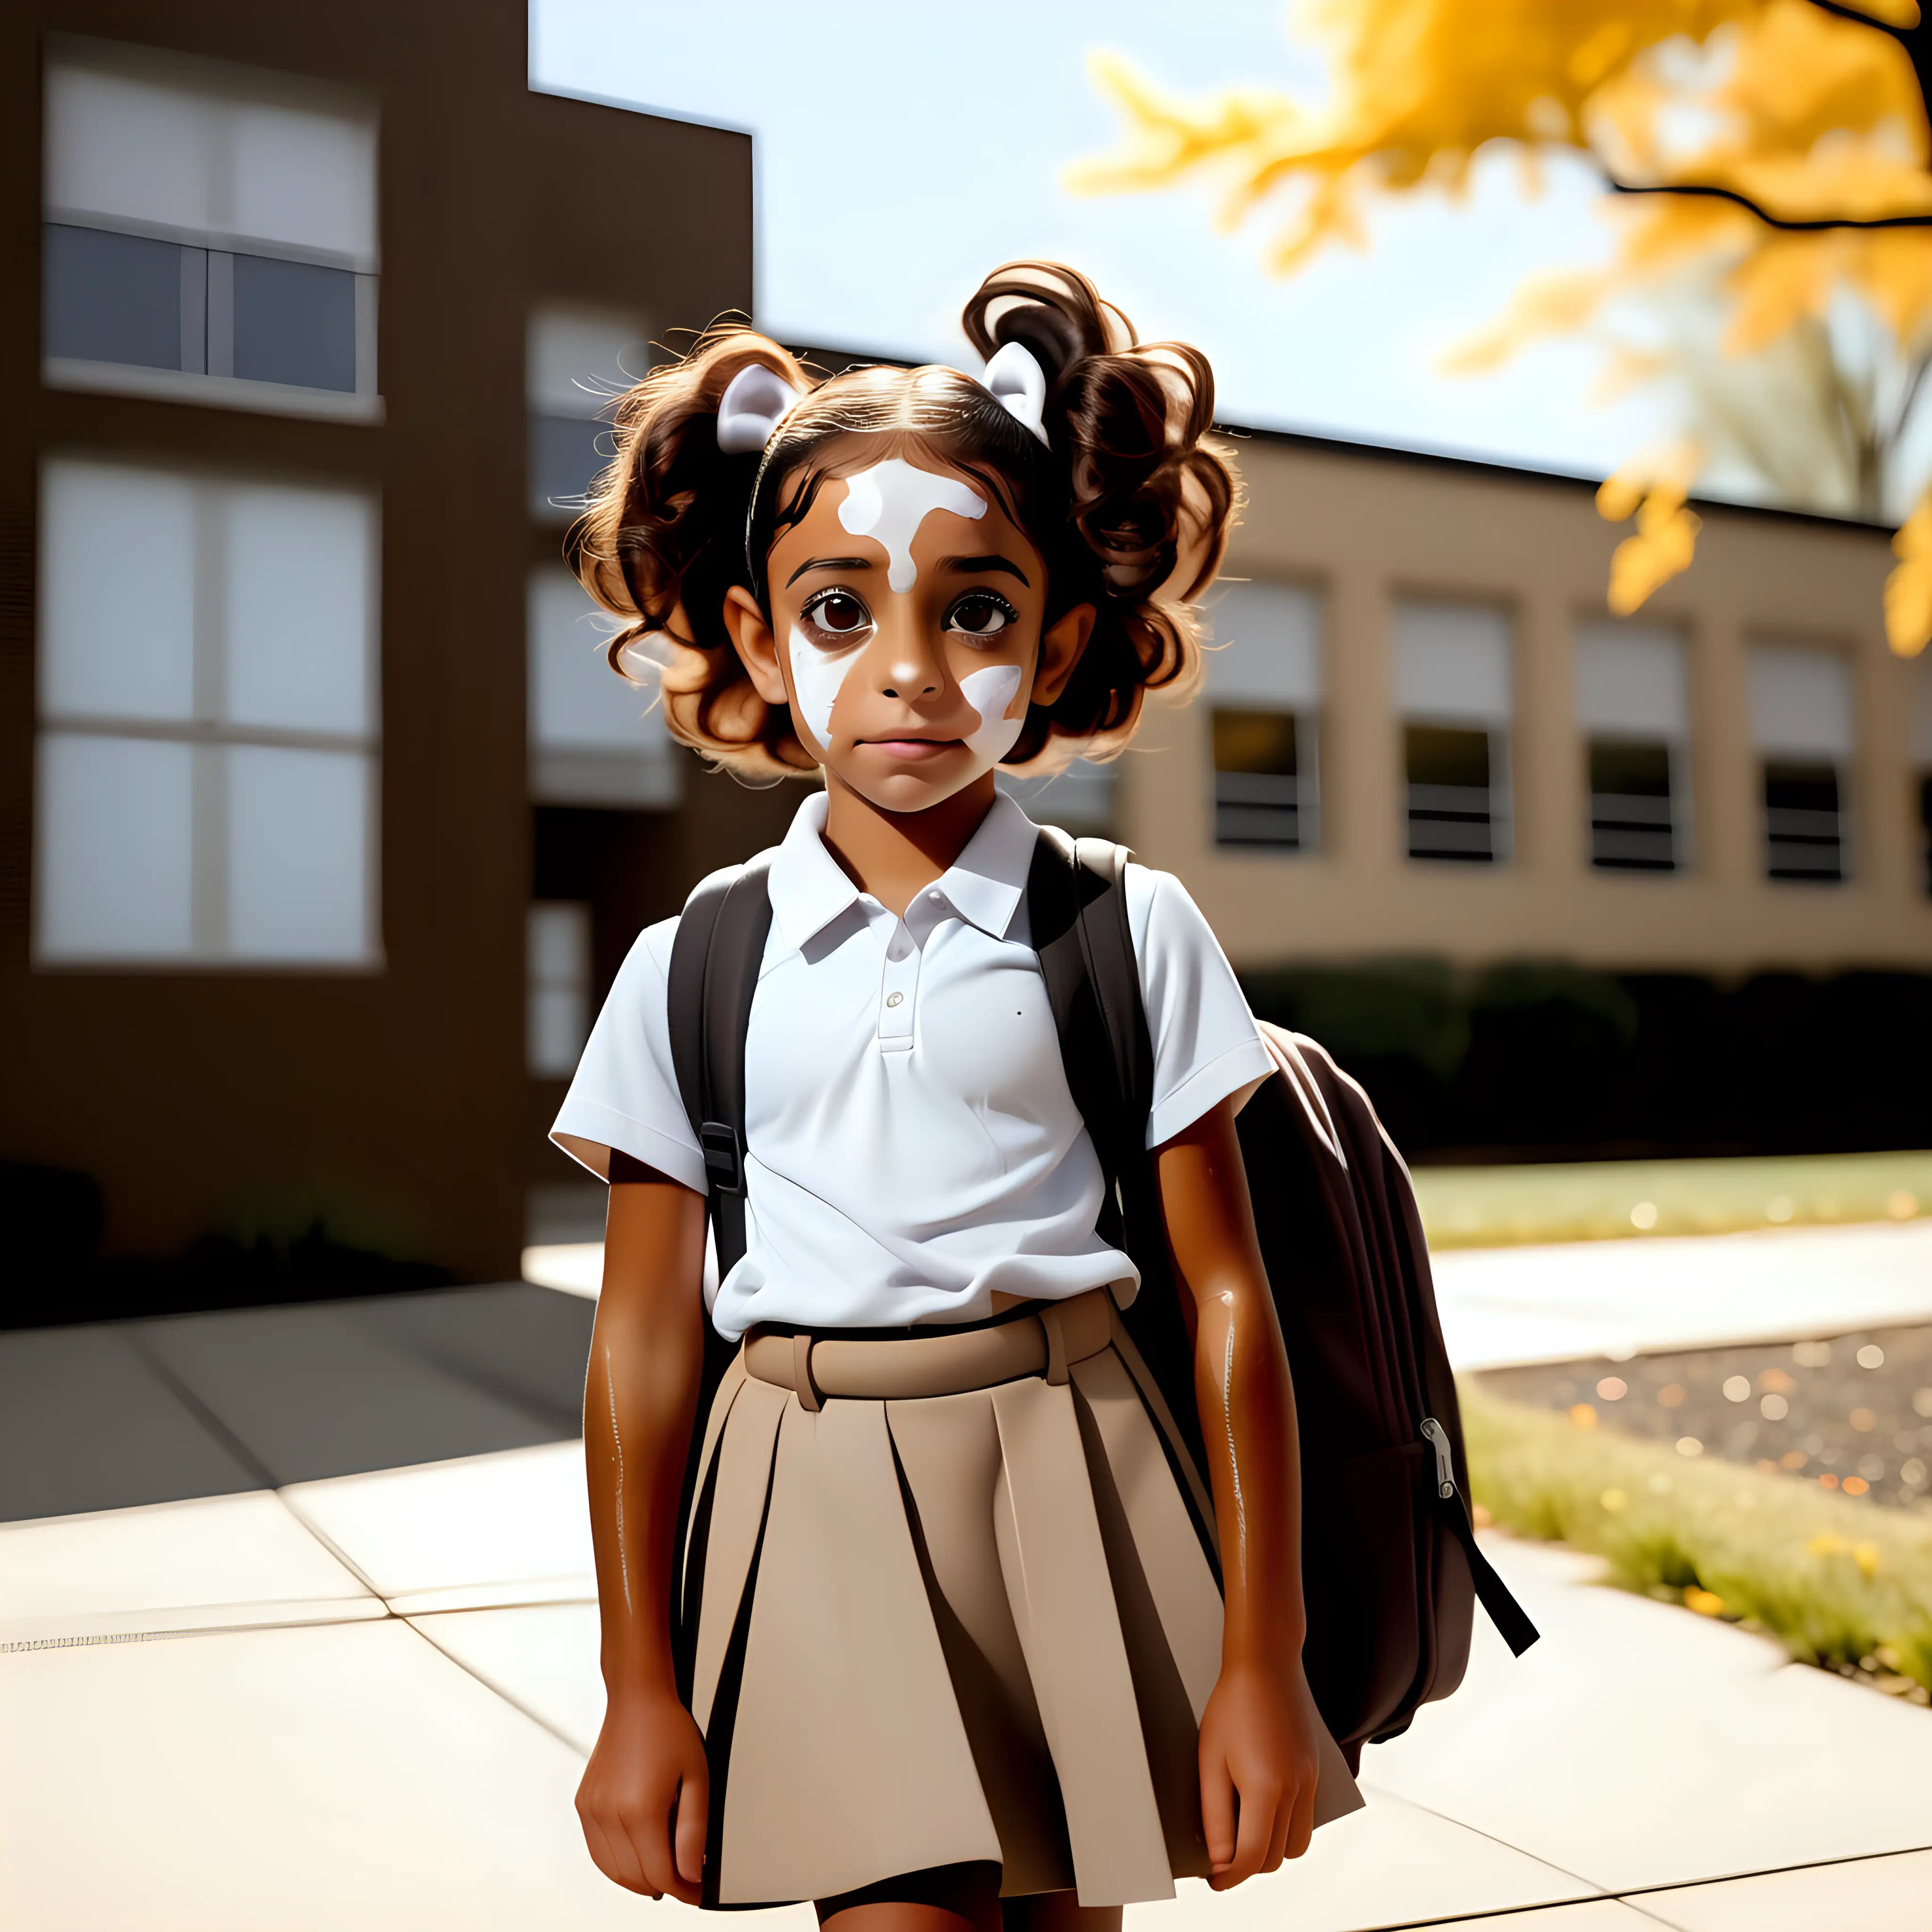 Confident little brown girl with vitiligo going to school
